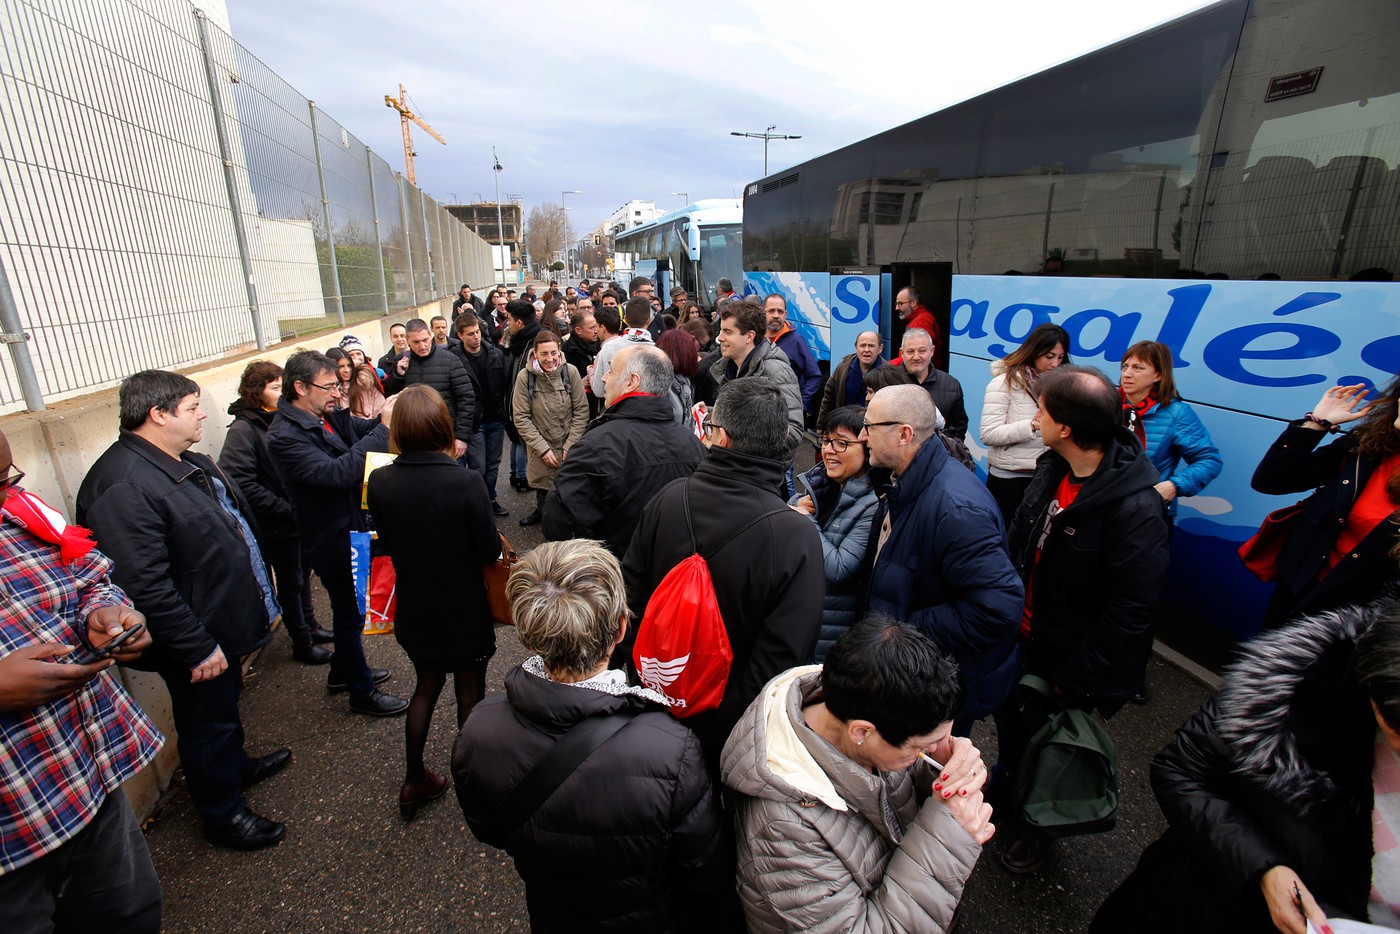 BAXI Manresa organizes a bus to go to the Catalan League, in Lleida